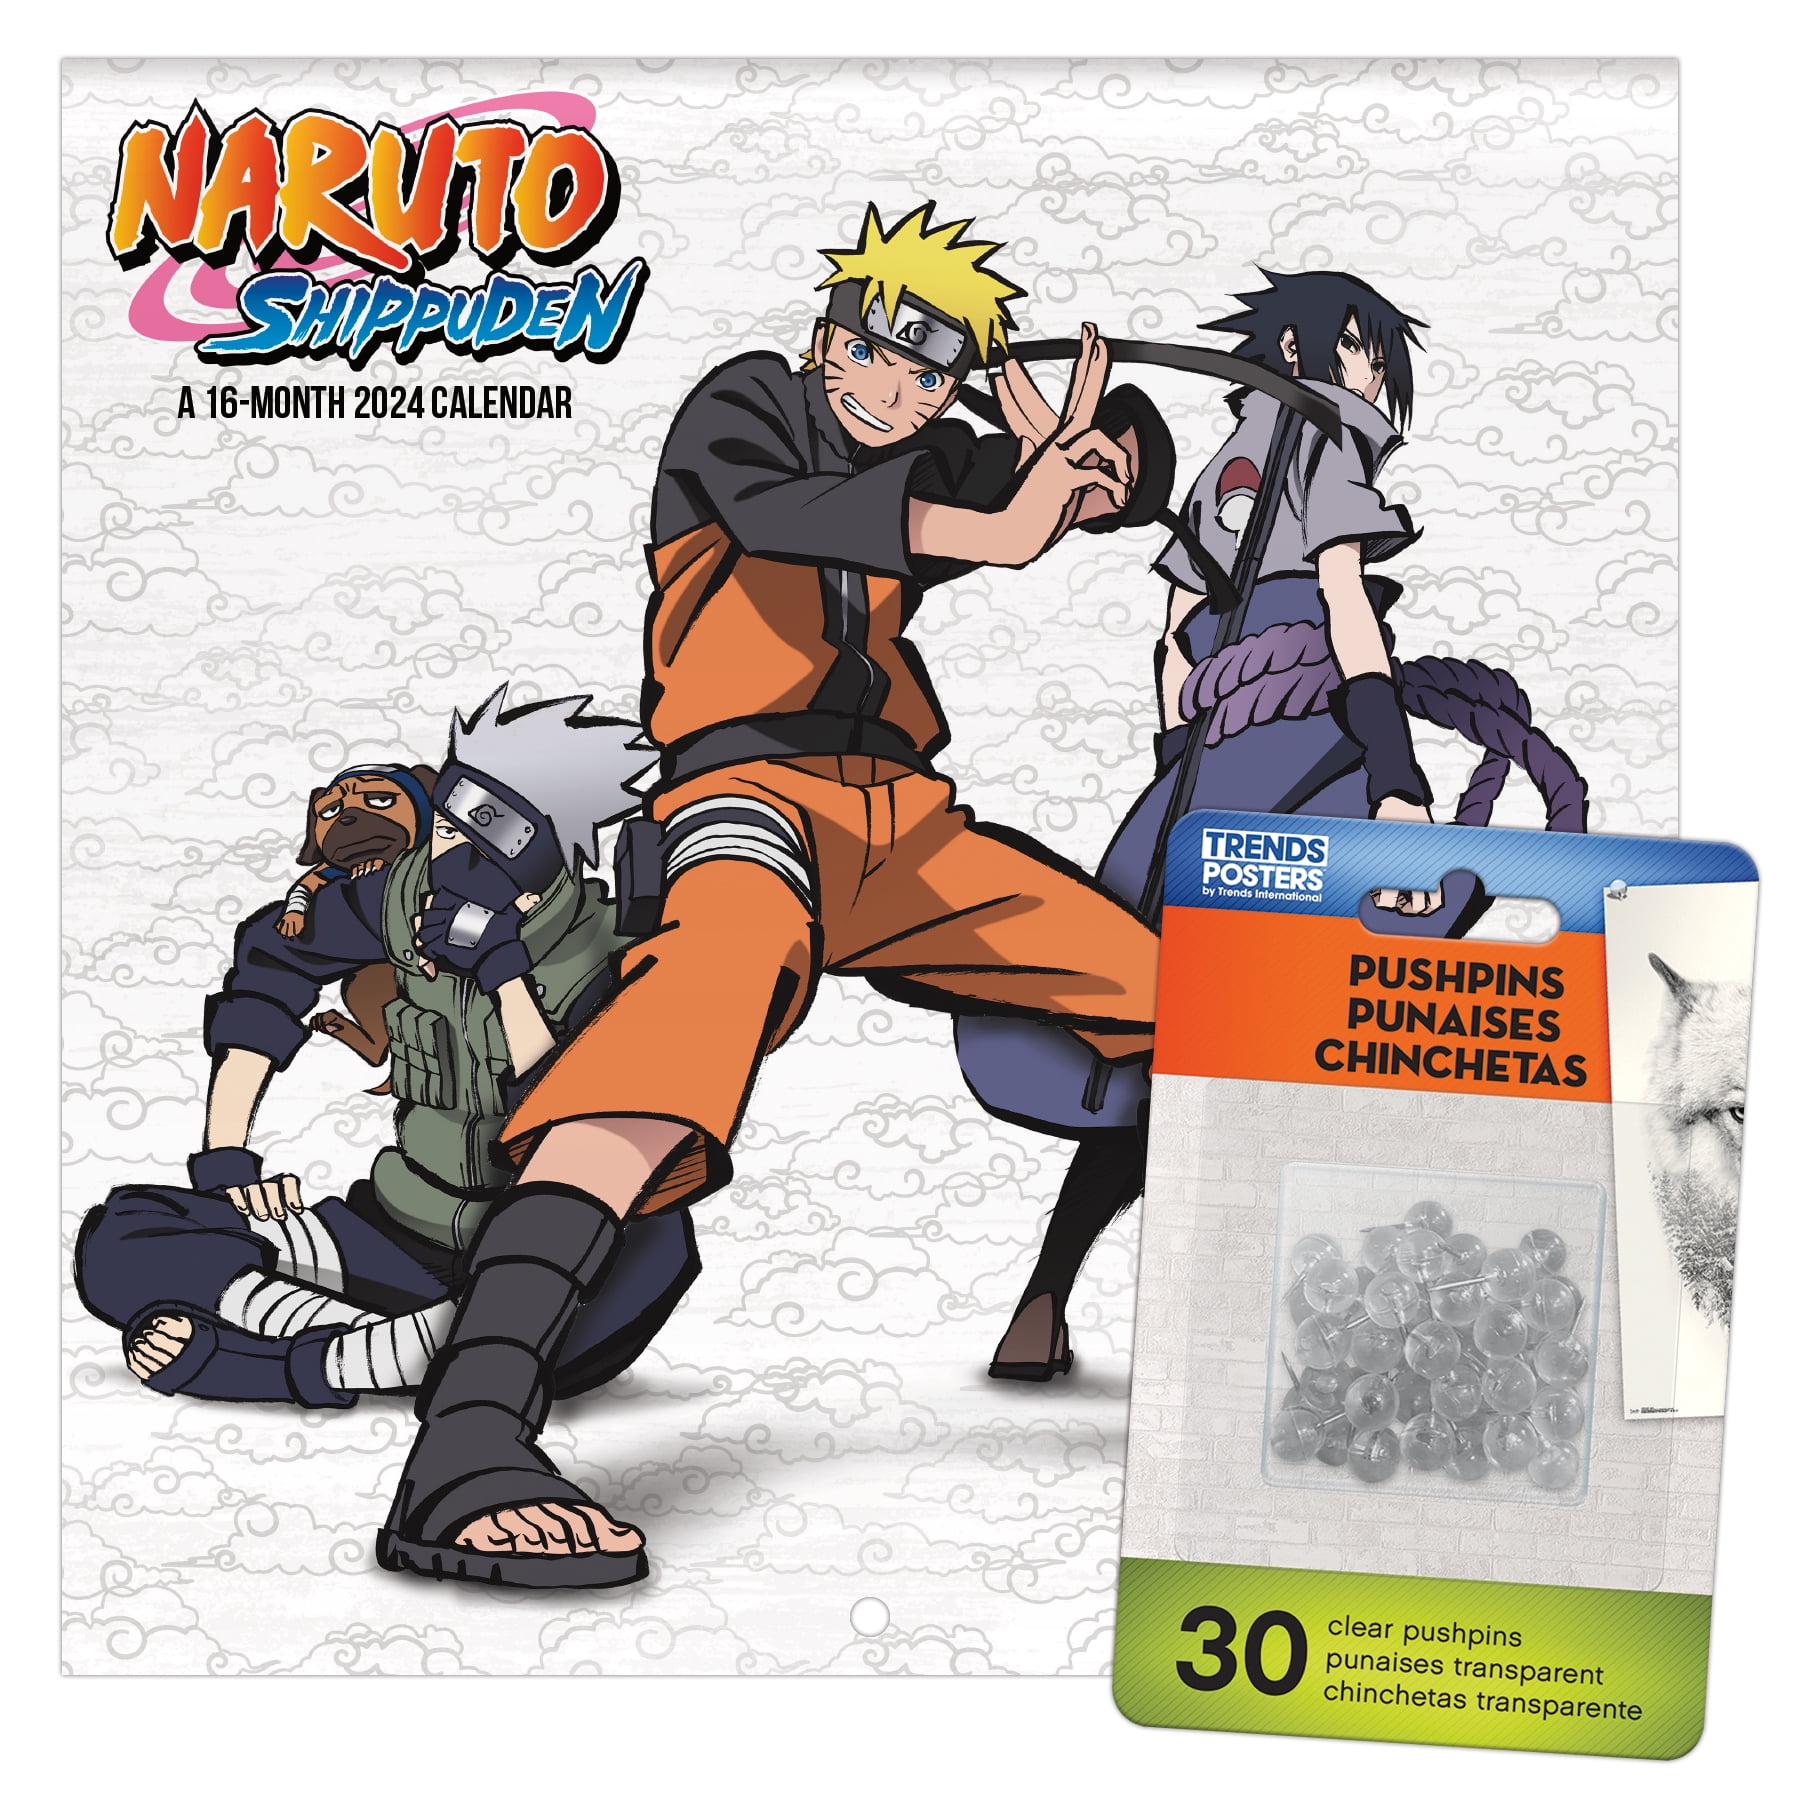 Pin on Naruto Game